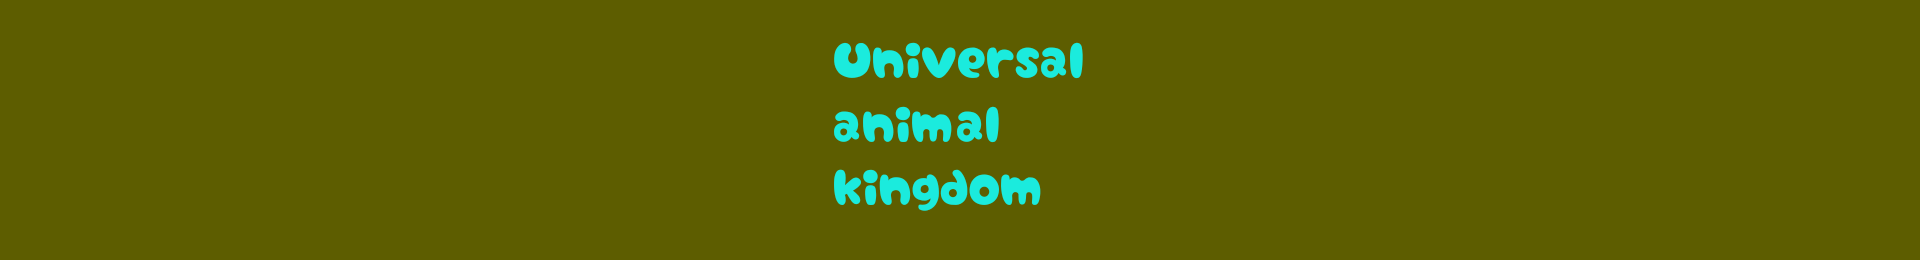 Universal animal kingdom banner